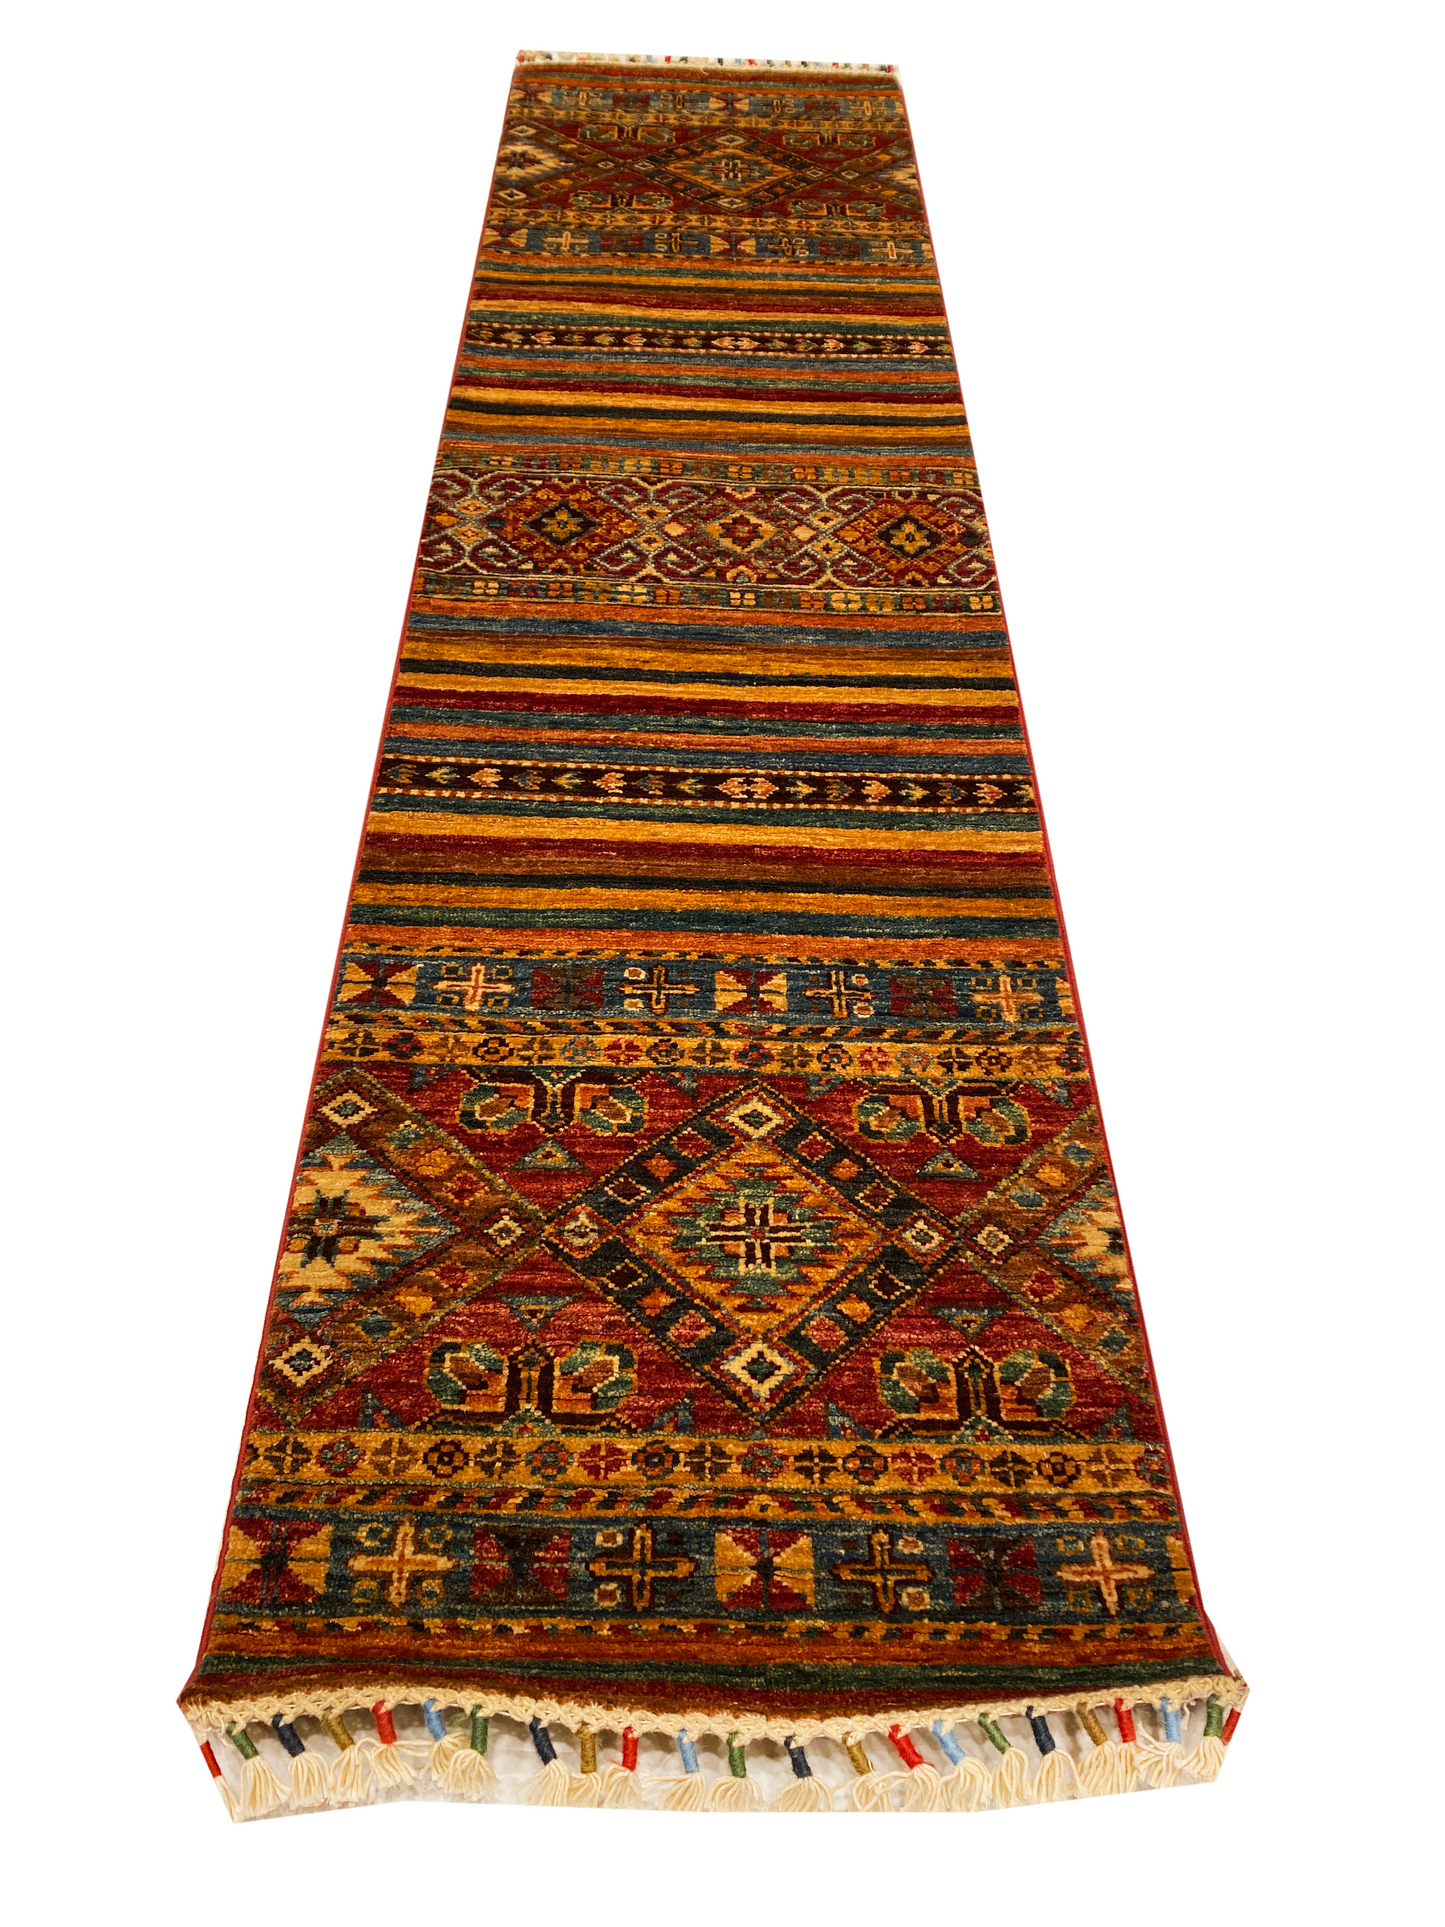 Şirvan Runner Carpet 209 X 54 cm